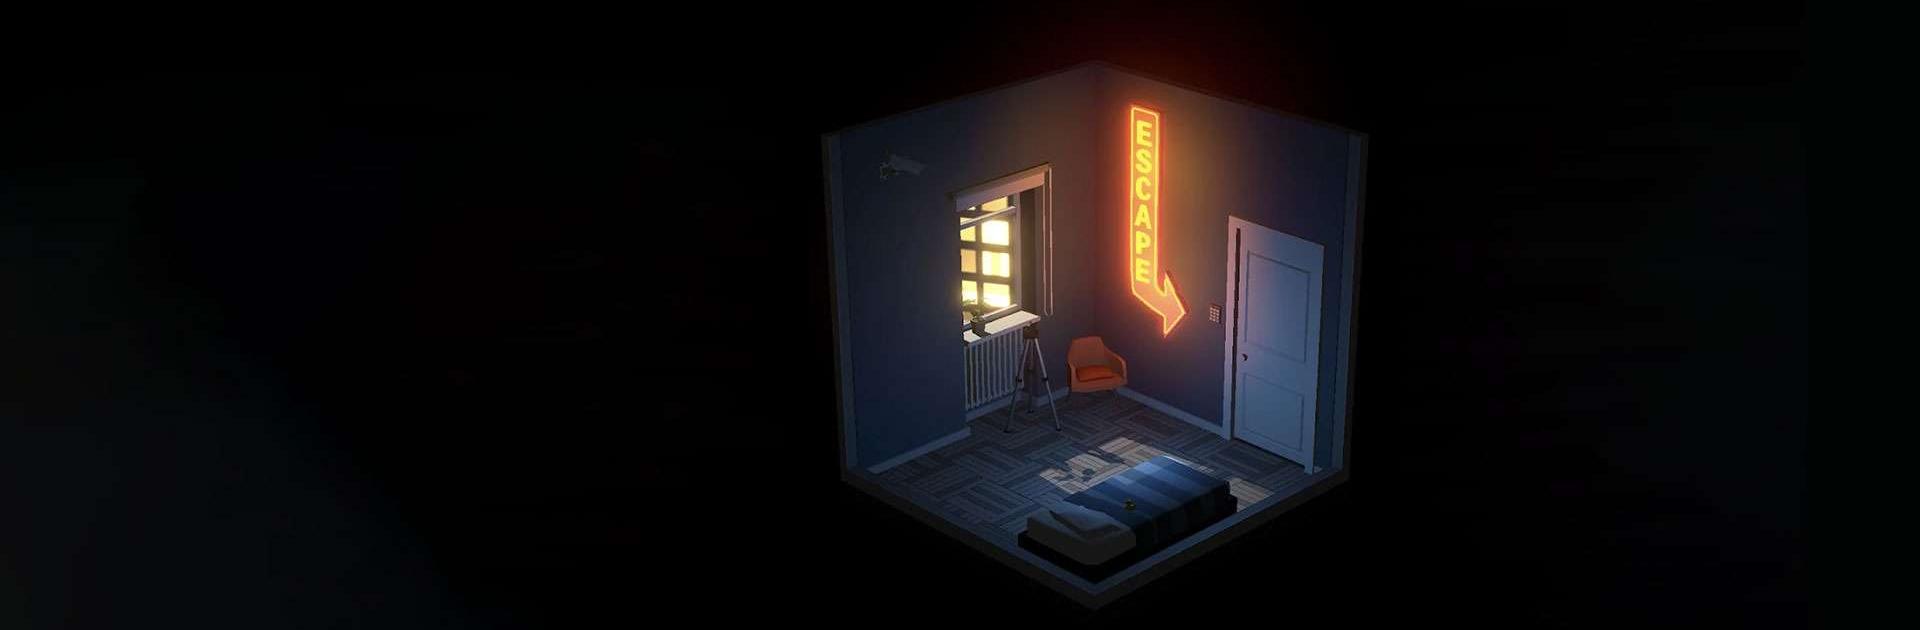 50 Tiny Room Escape